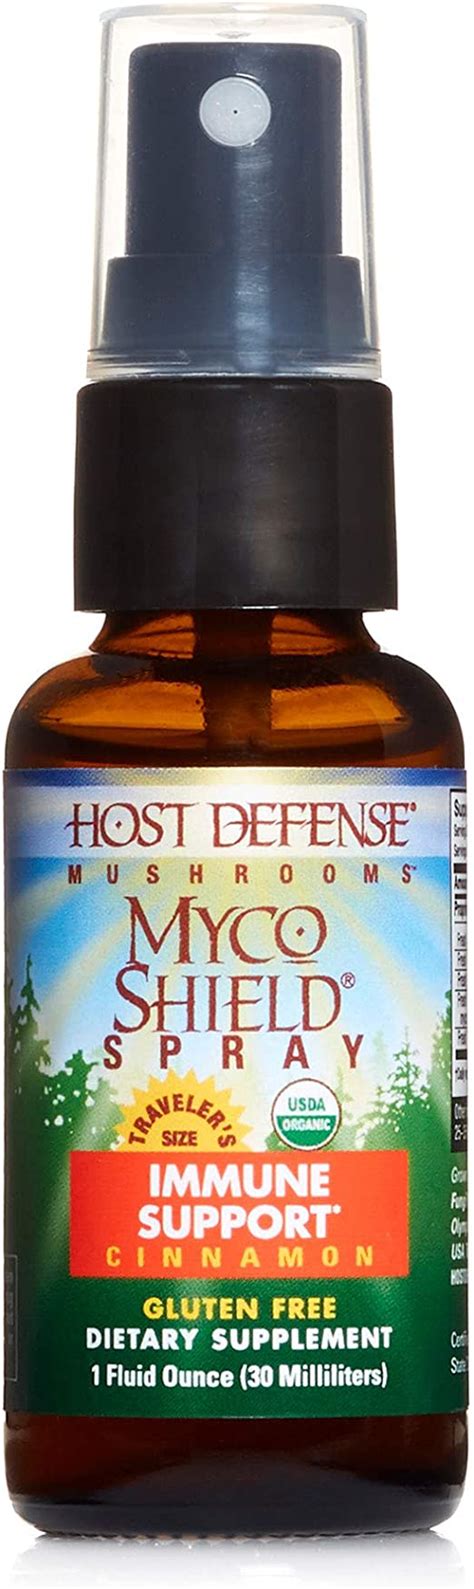 host defense mycoshield multi mushroom spray cinnamon daily immune support with agarikon